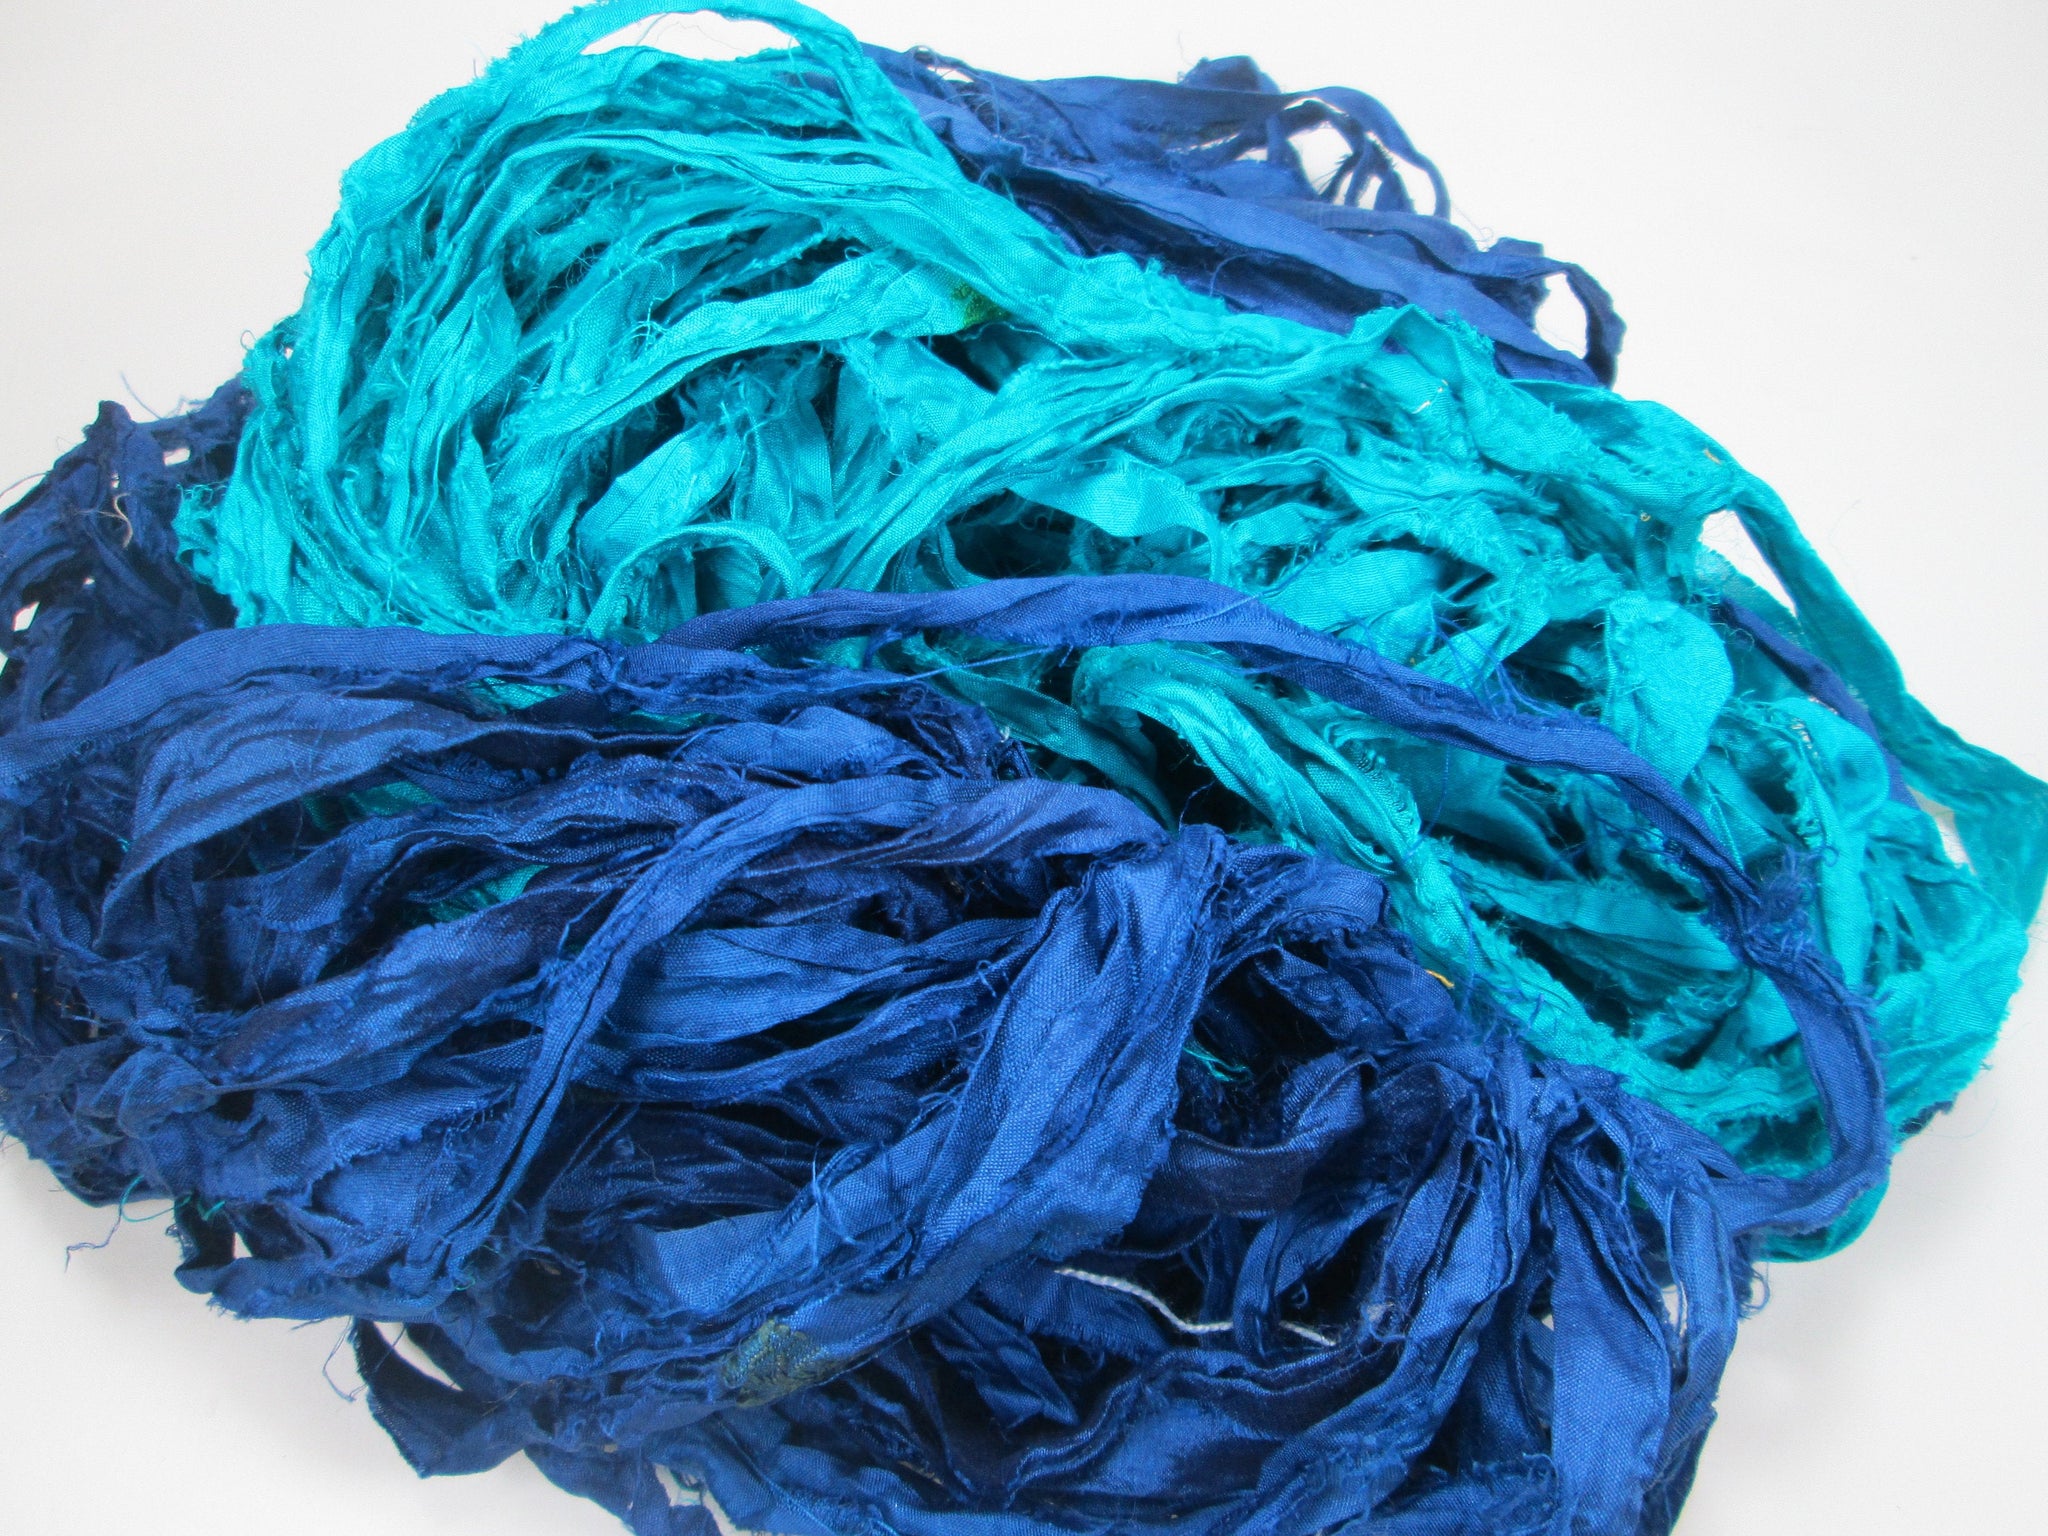 Jewel Blues Deep Blue & Turquoise/Teal Recycled Sari Silk Ribbon 5